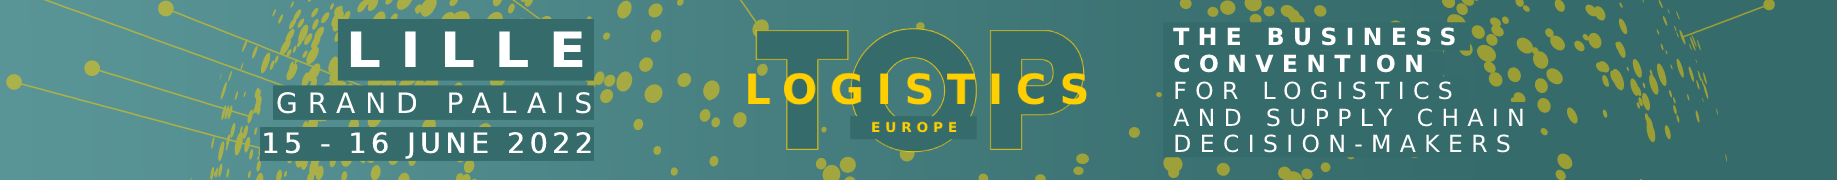 Top Logistics Europe 2022